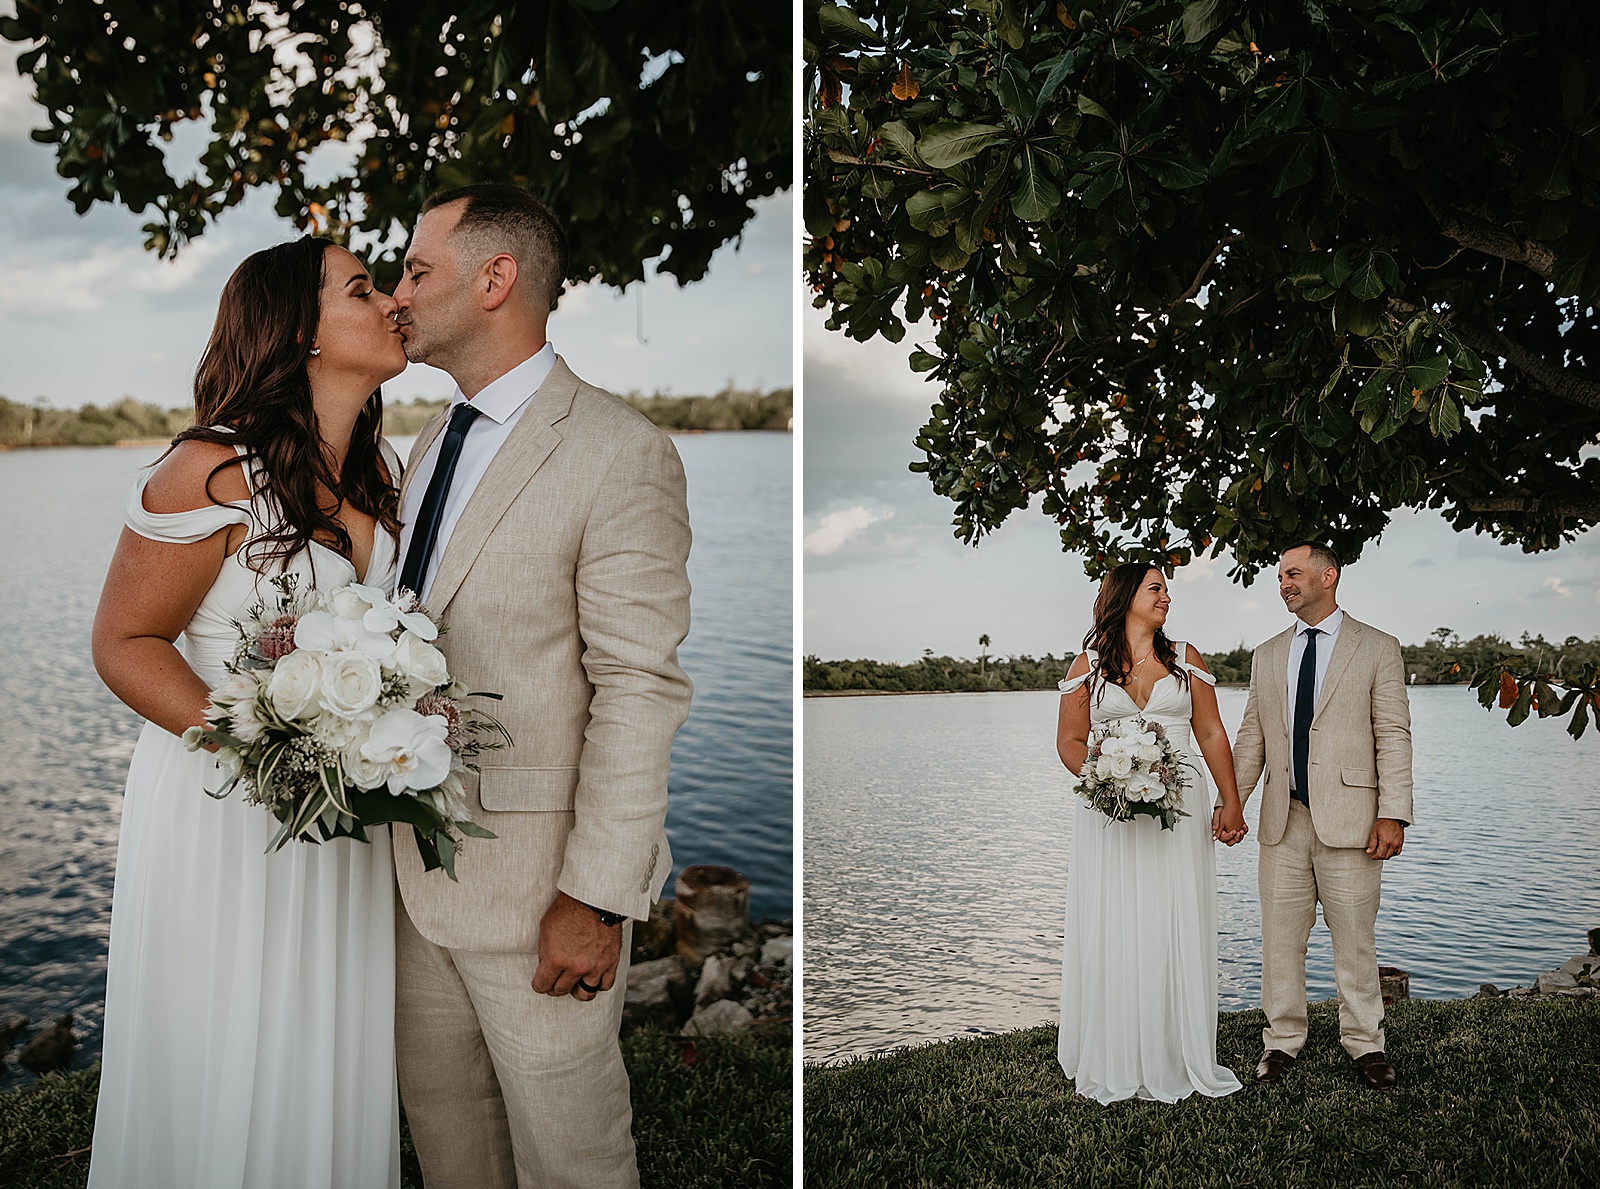 Intimate Jupiter Florida Wedding Captured by Jupiter Florida Wedding Photographer, Krystal Capone Photography